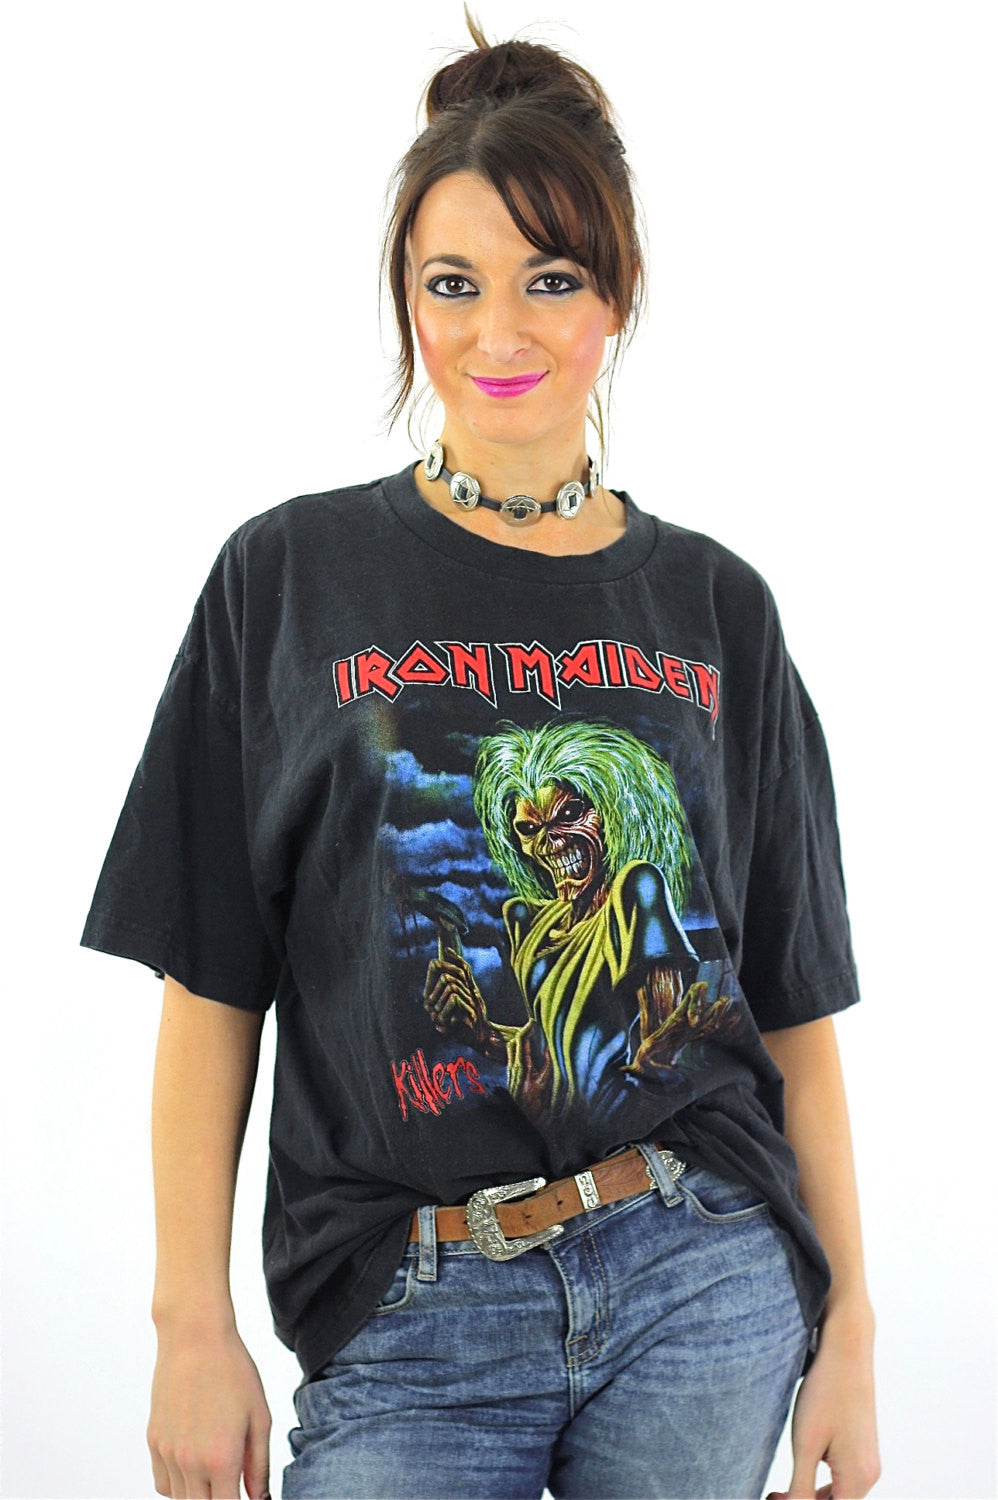 Iron Maiden Killers Tour tshirt concert tee Band shirt rock n roll ...